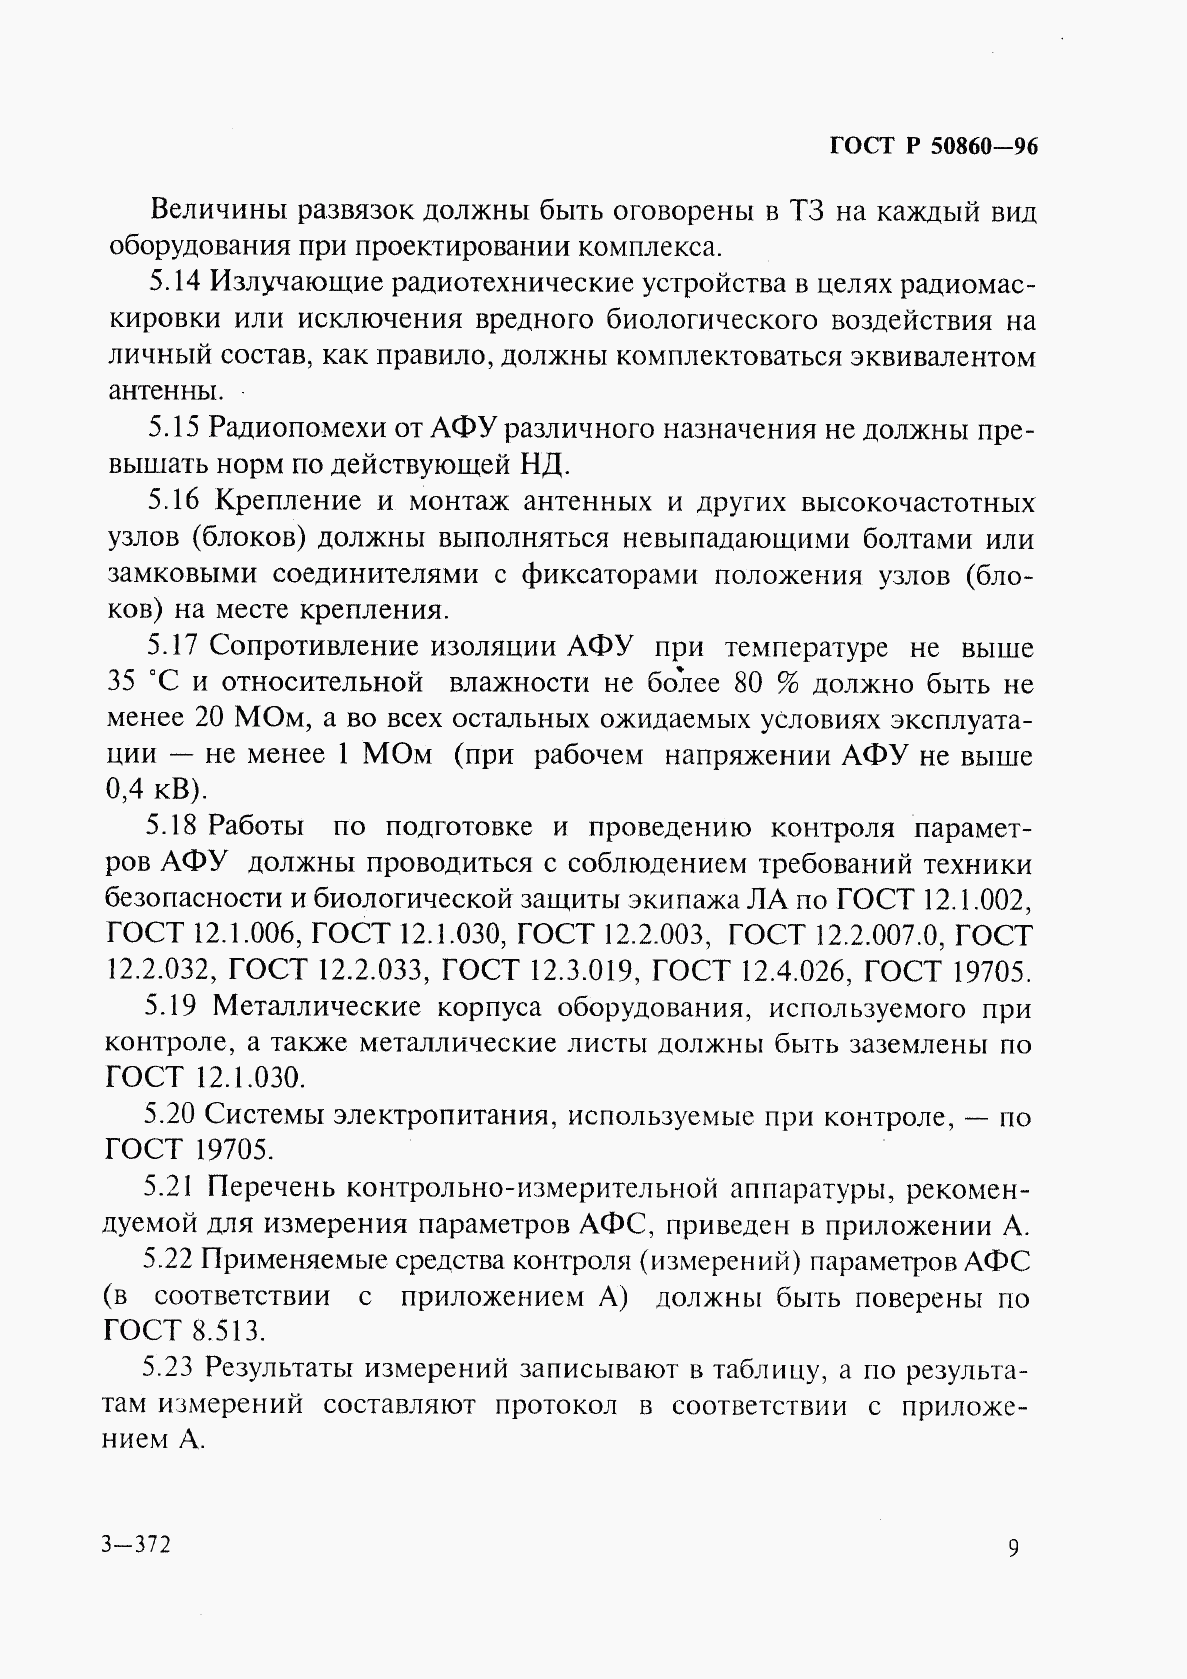 ГОСТ Р 50860-96, страница 14